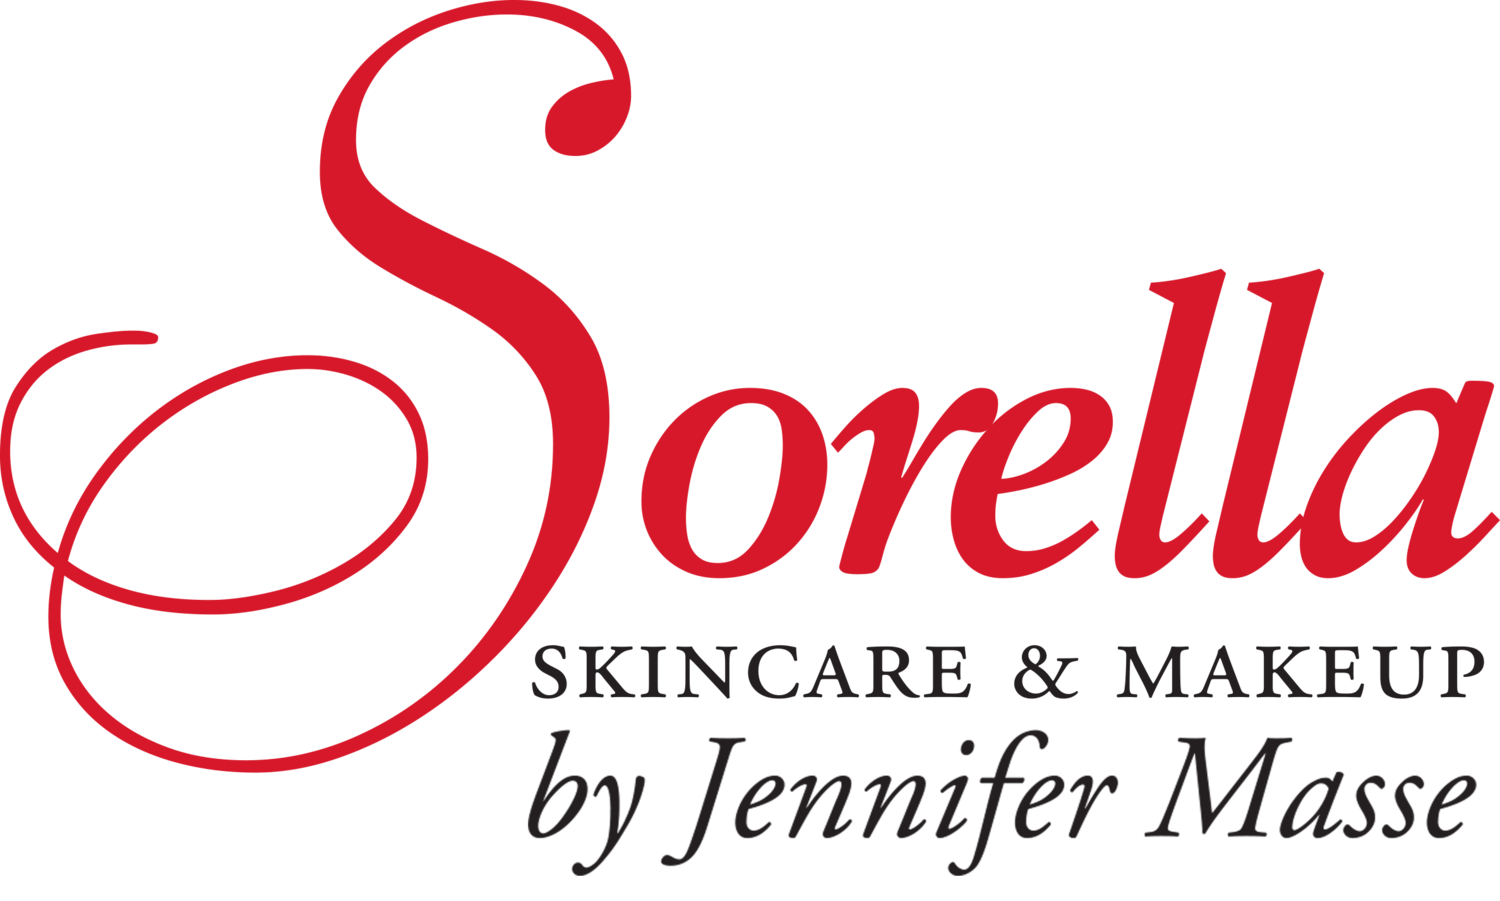 Sorella Skin Care and Make Up